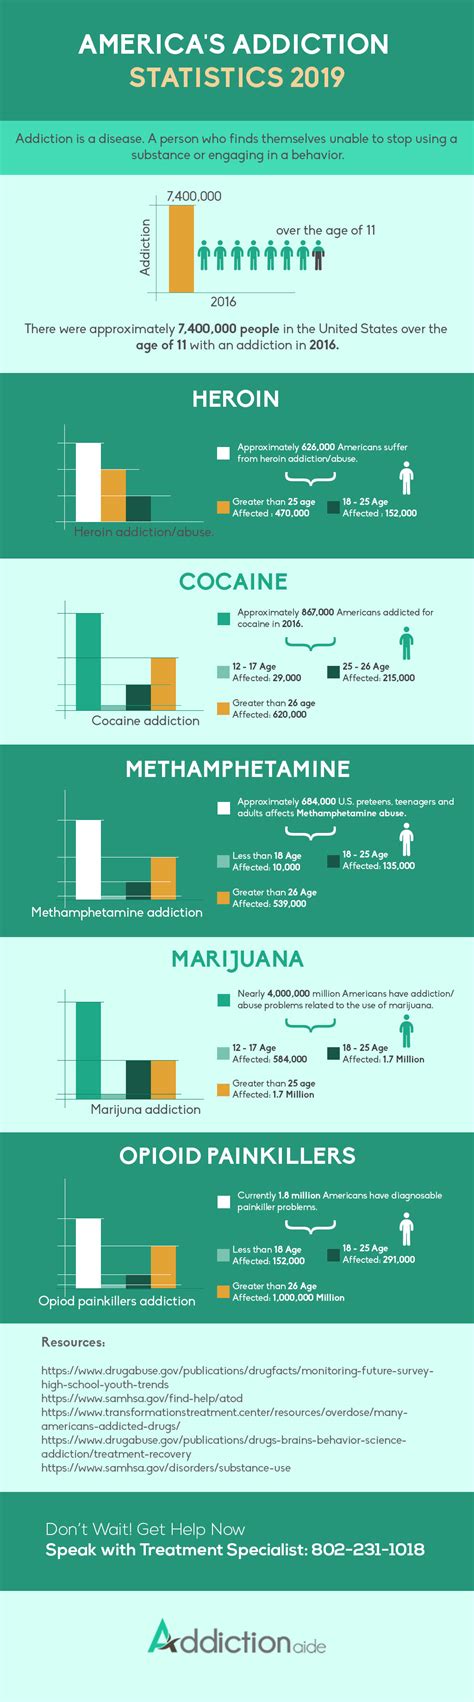 Americas Addiction Statistics 2019 Infographic